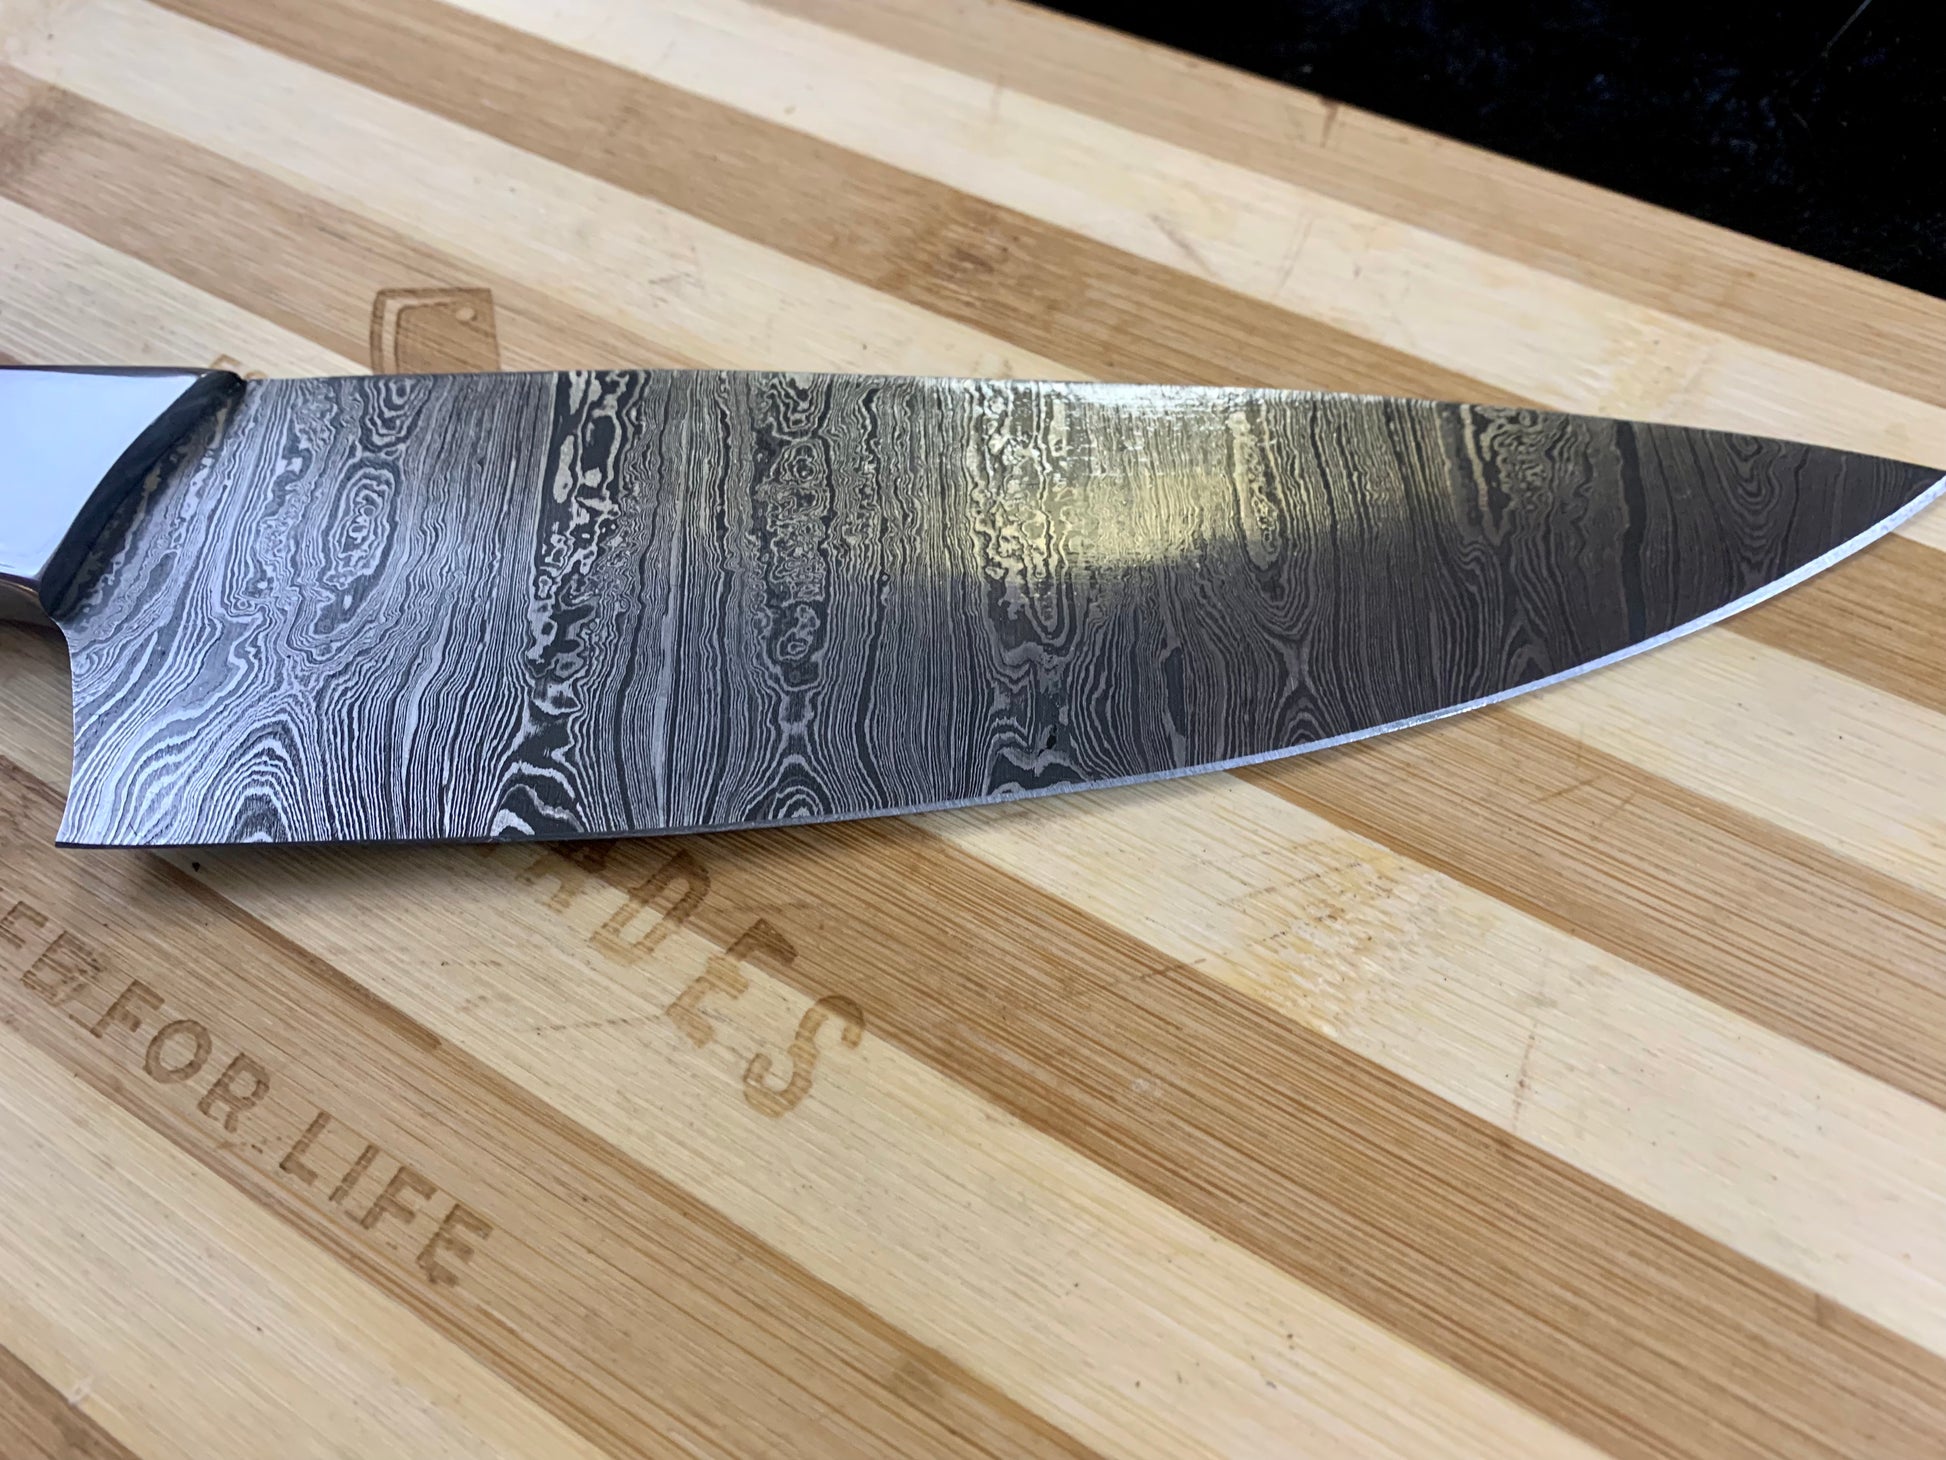 Damascus steel knife maintenance